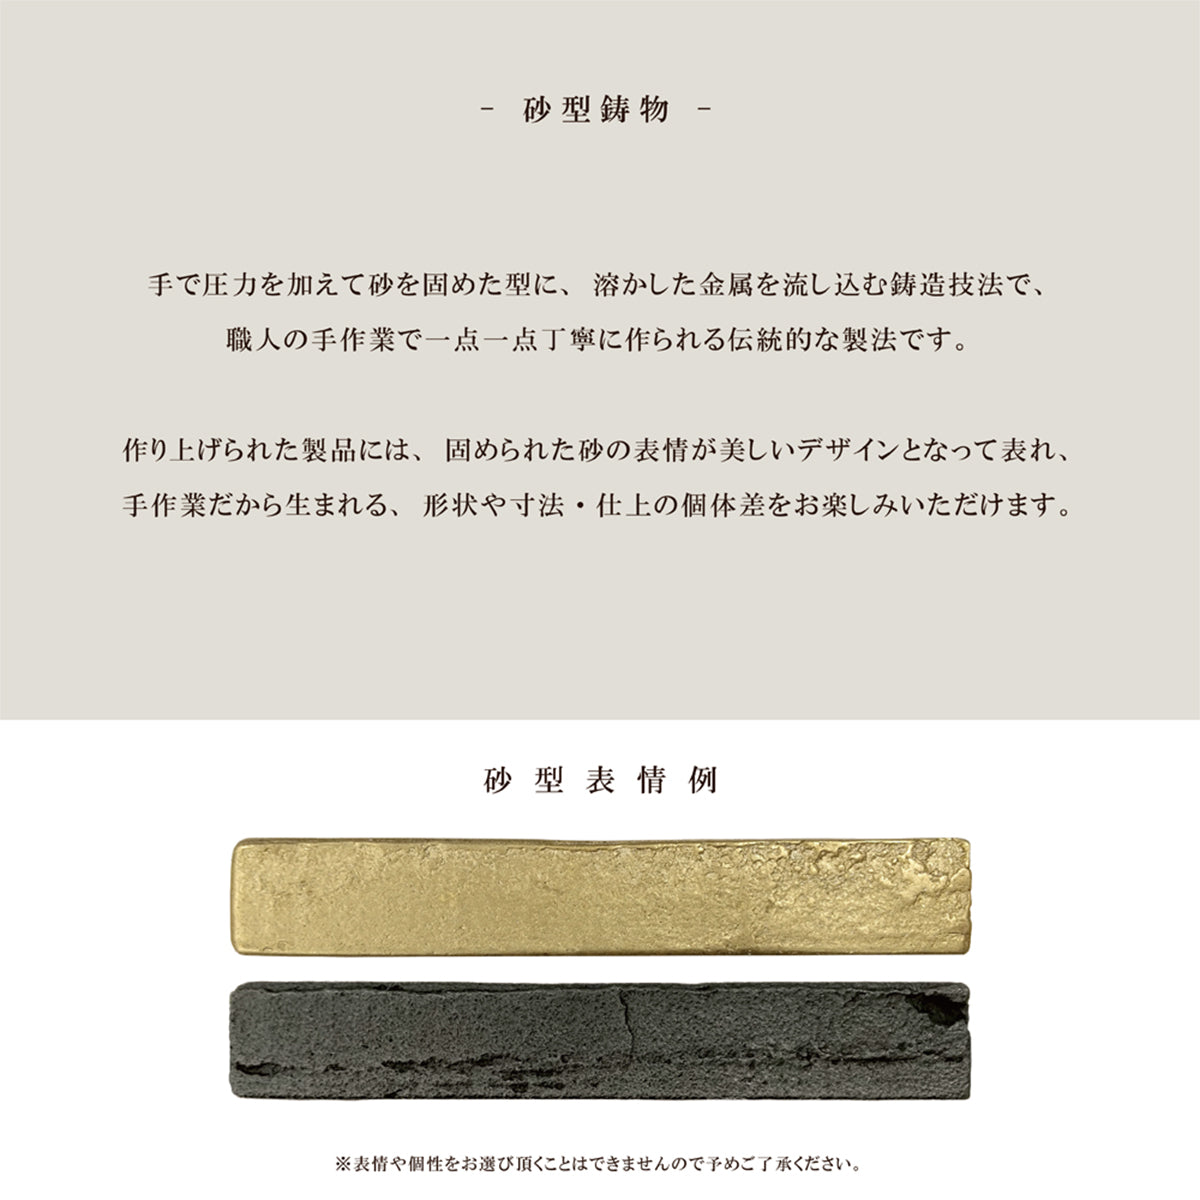 Brass Casting 真鍮鋳物 フック (大 真鍮色 CB-203)